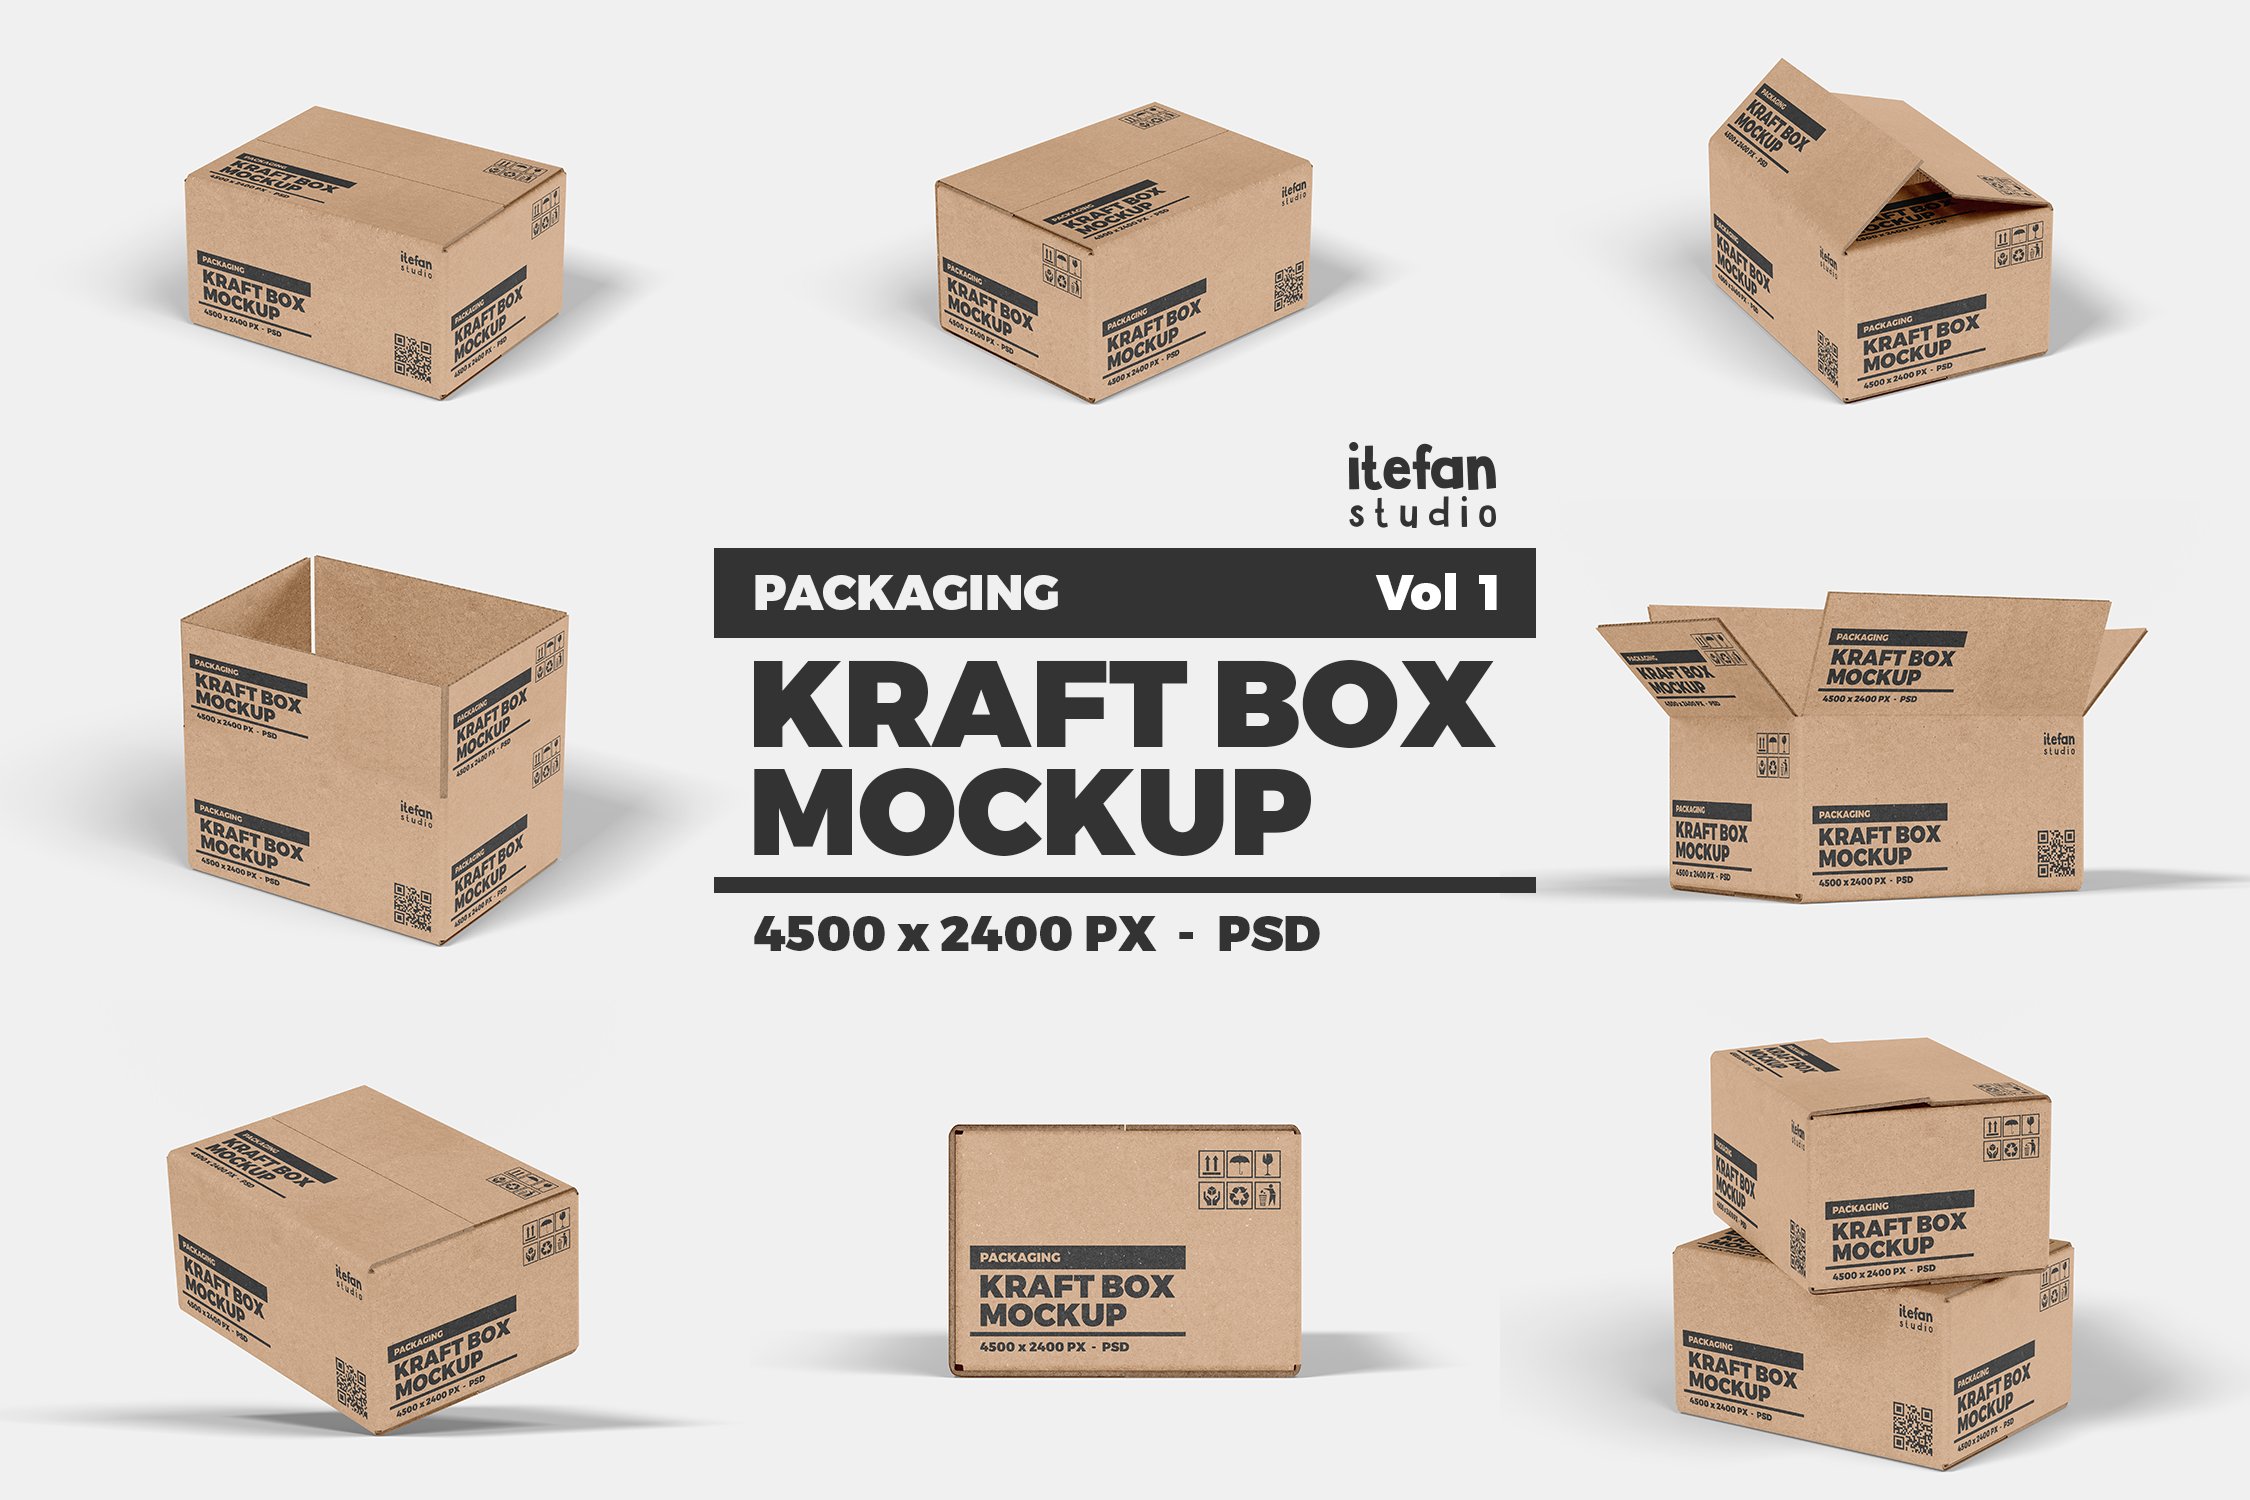 Kraft Box Mockup - Packaging Vol 1 cover image.